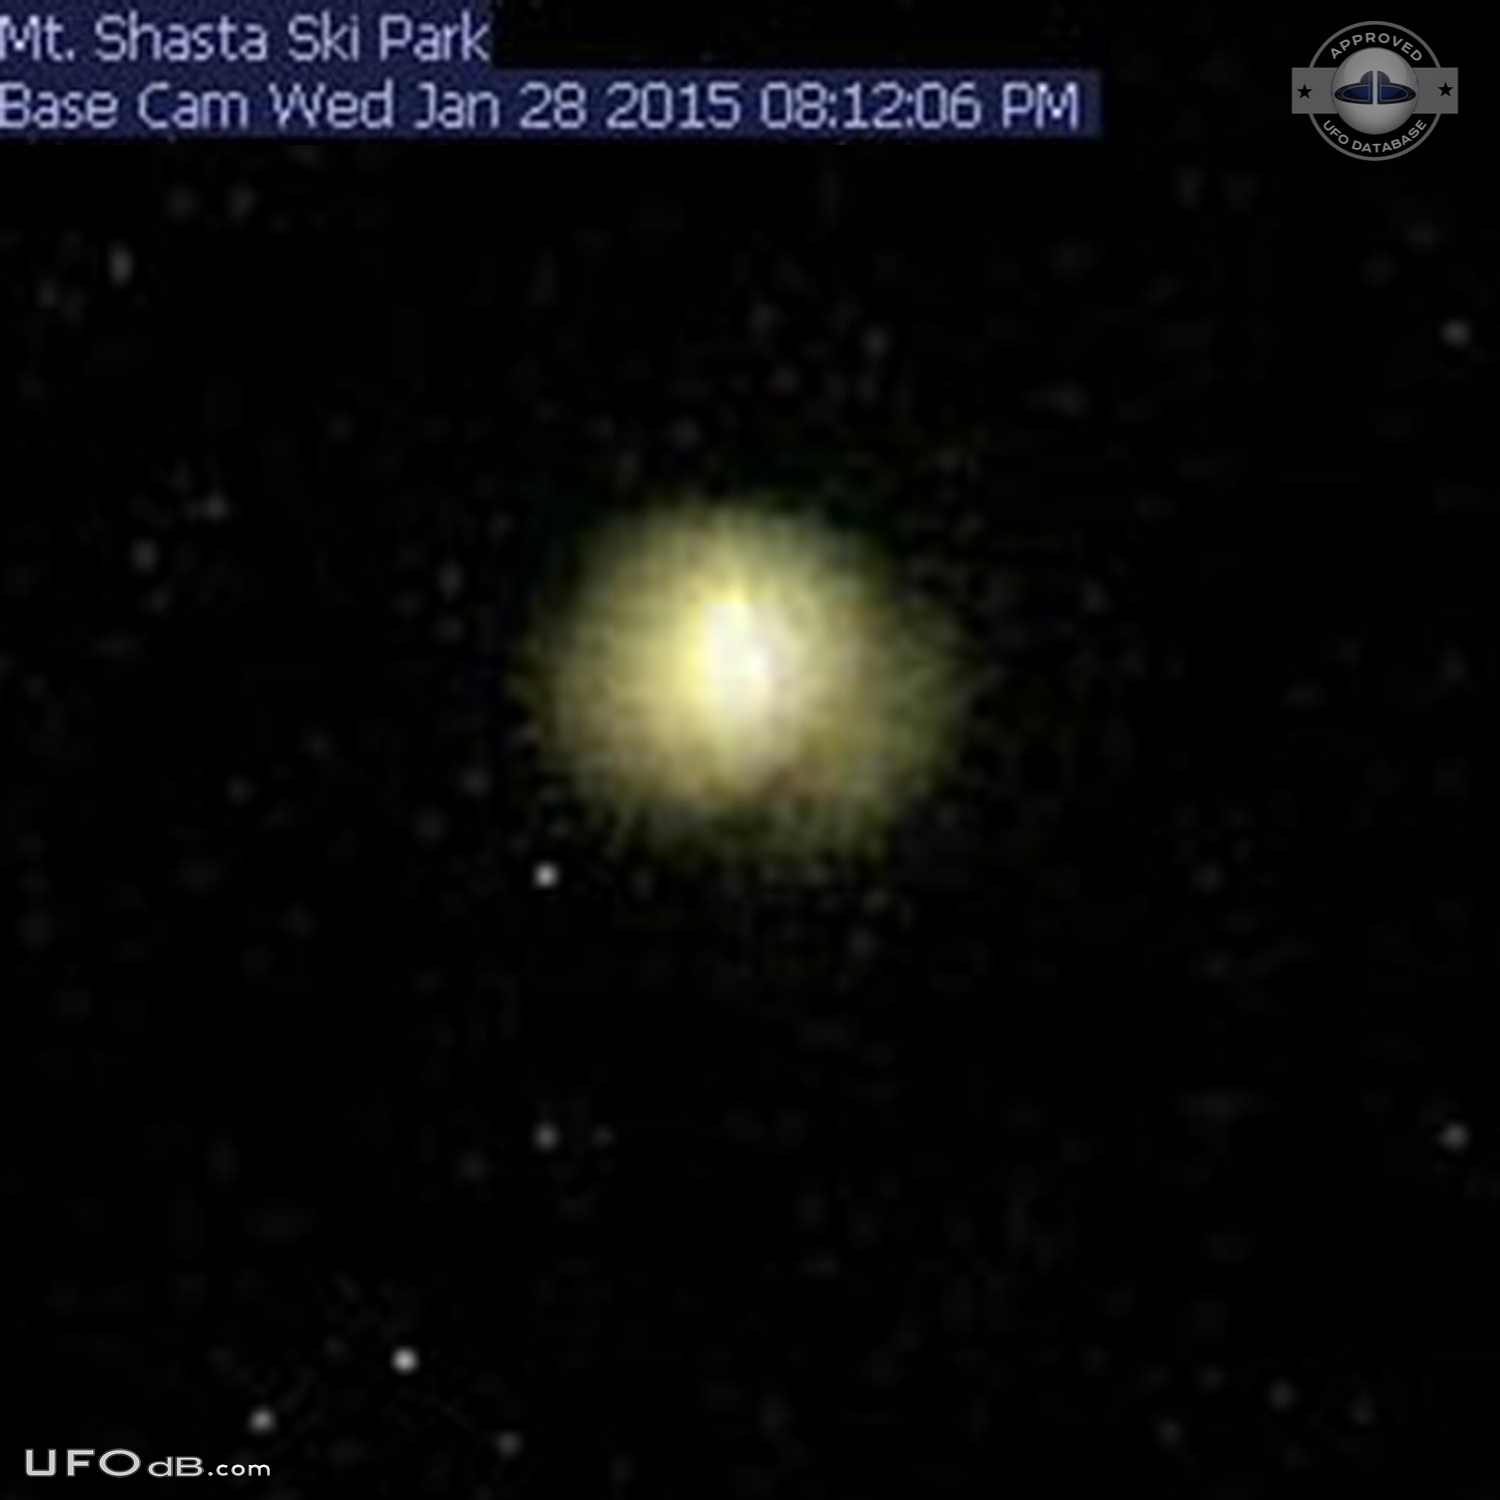 Ski cam of Mt Shasta captures a UFO orb in California USA 2015 UFO Picture #603-4